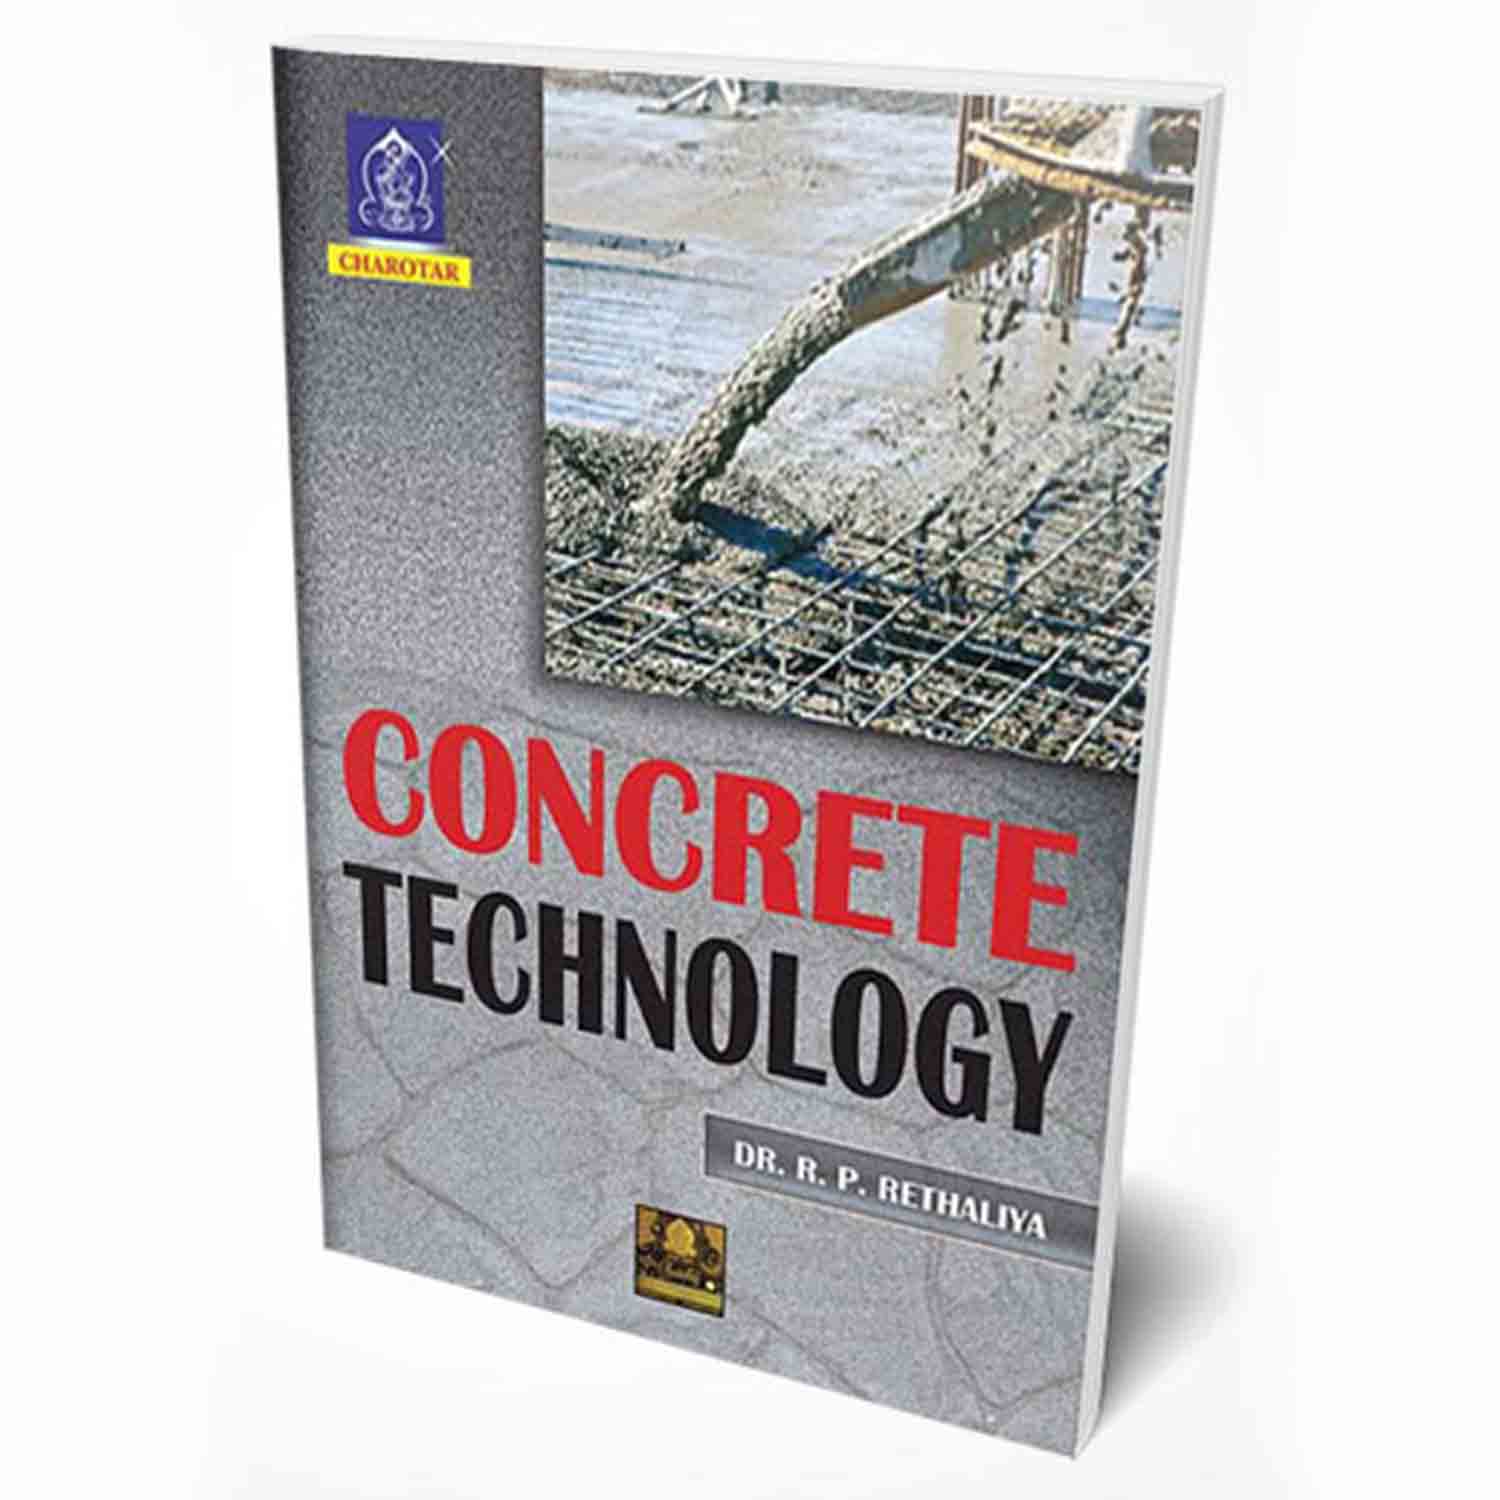 concrete technology research topics